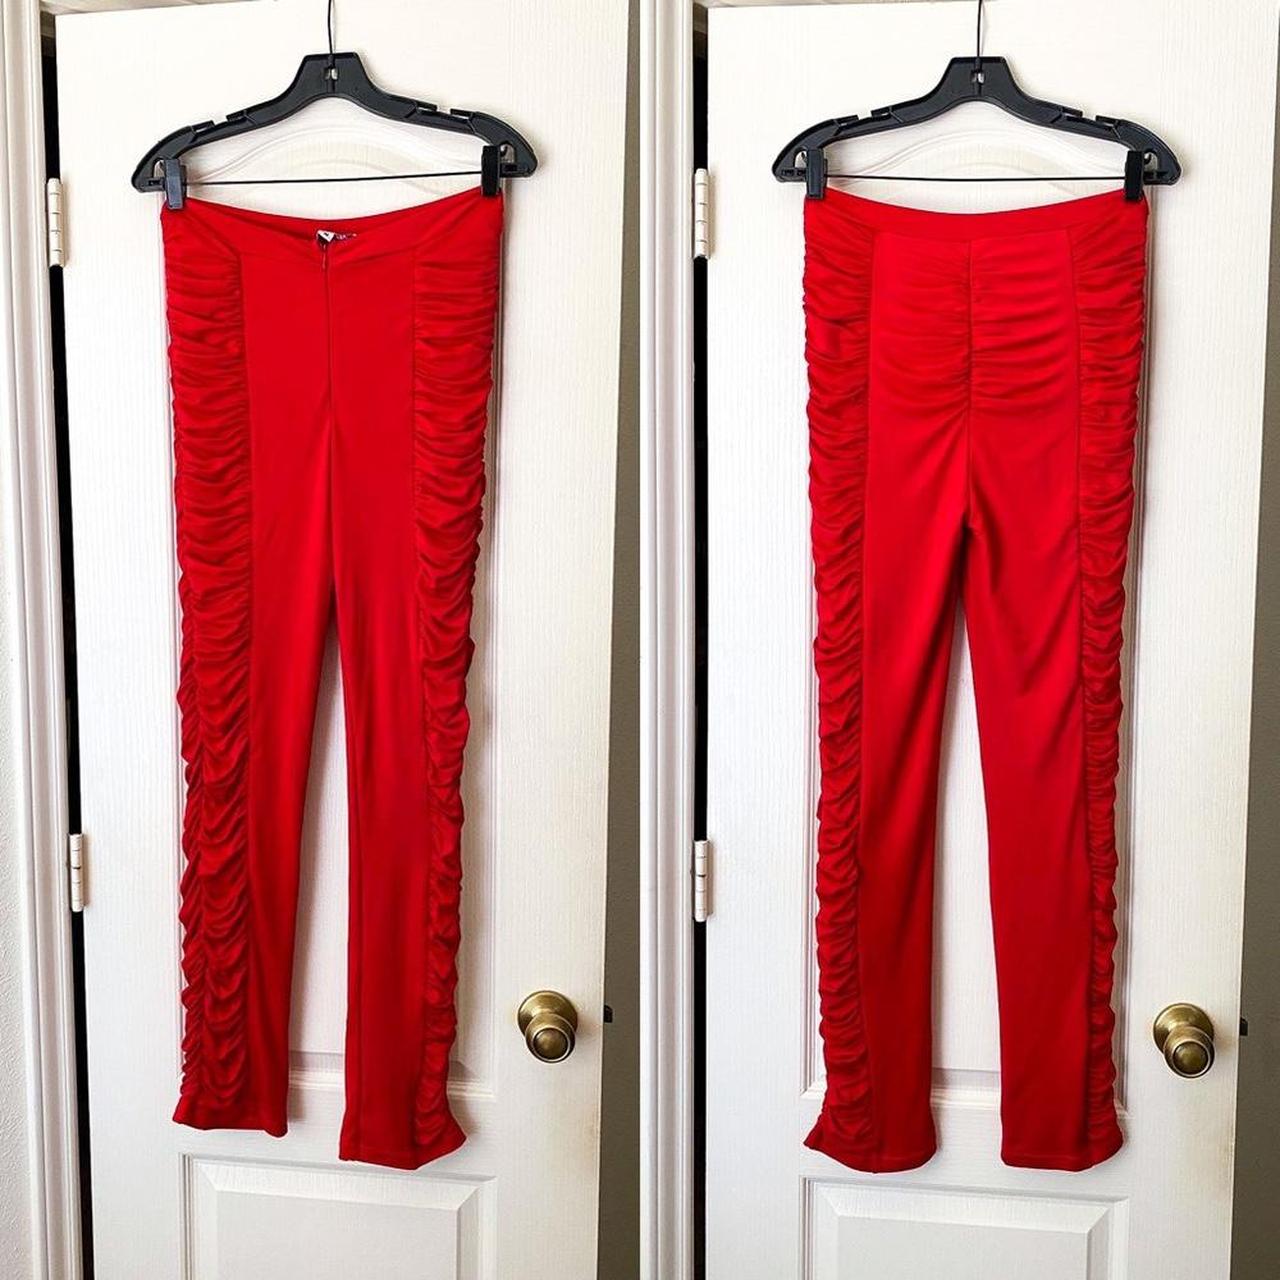 Product Image 1 - IAMGIA Estella Pant
Color Red
Size Medium
Excellent